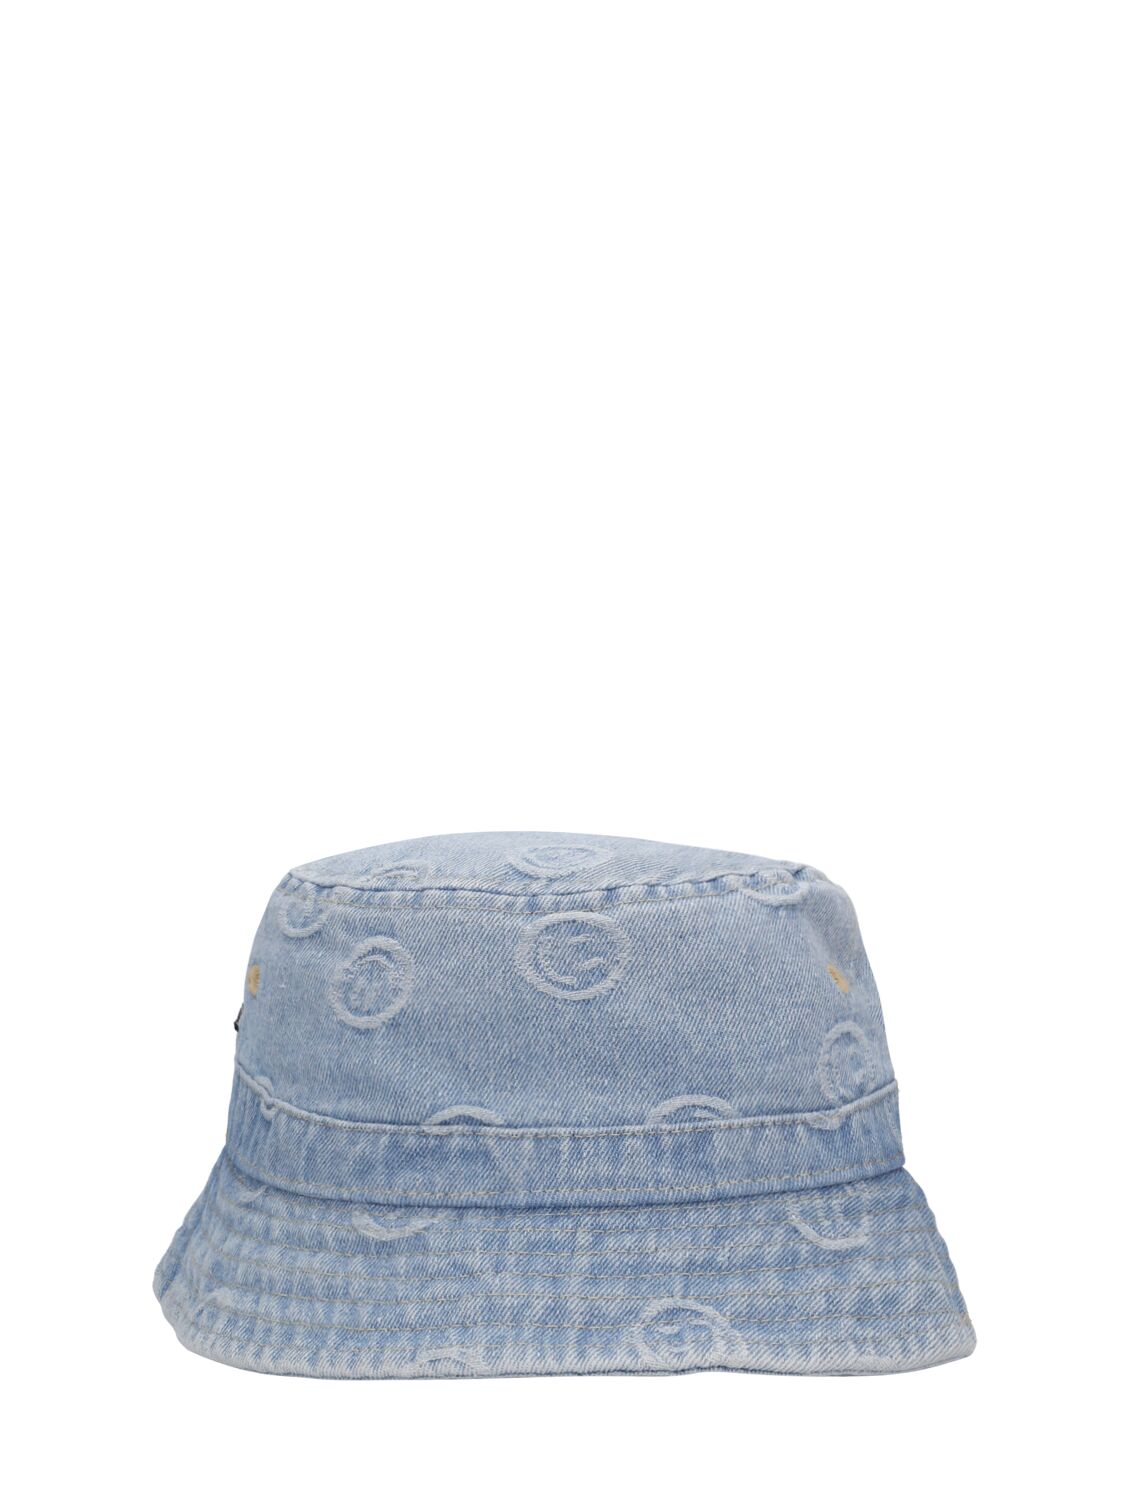 Image of Smile Printed Cotton Denim Bucket Hat